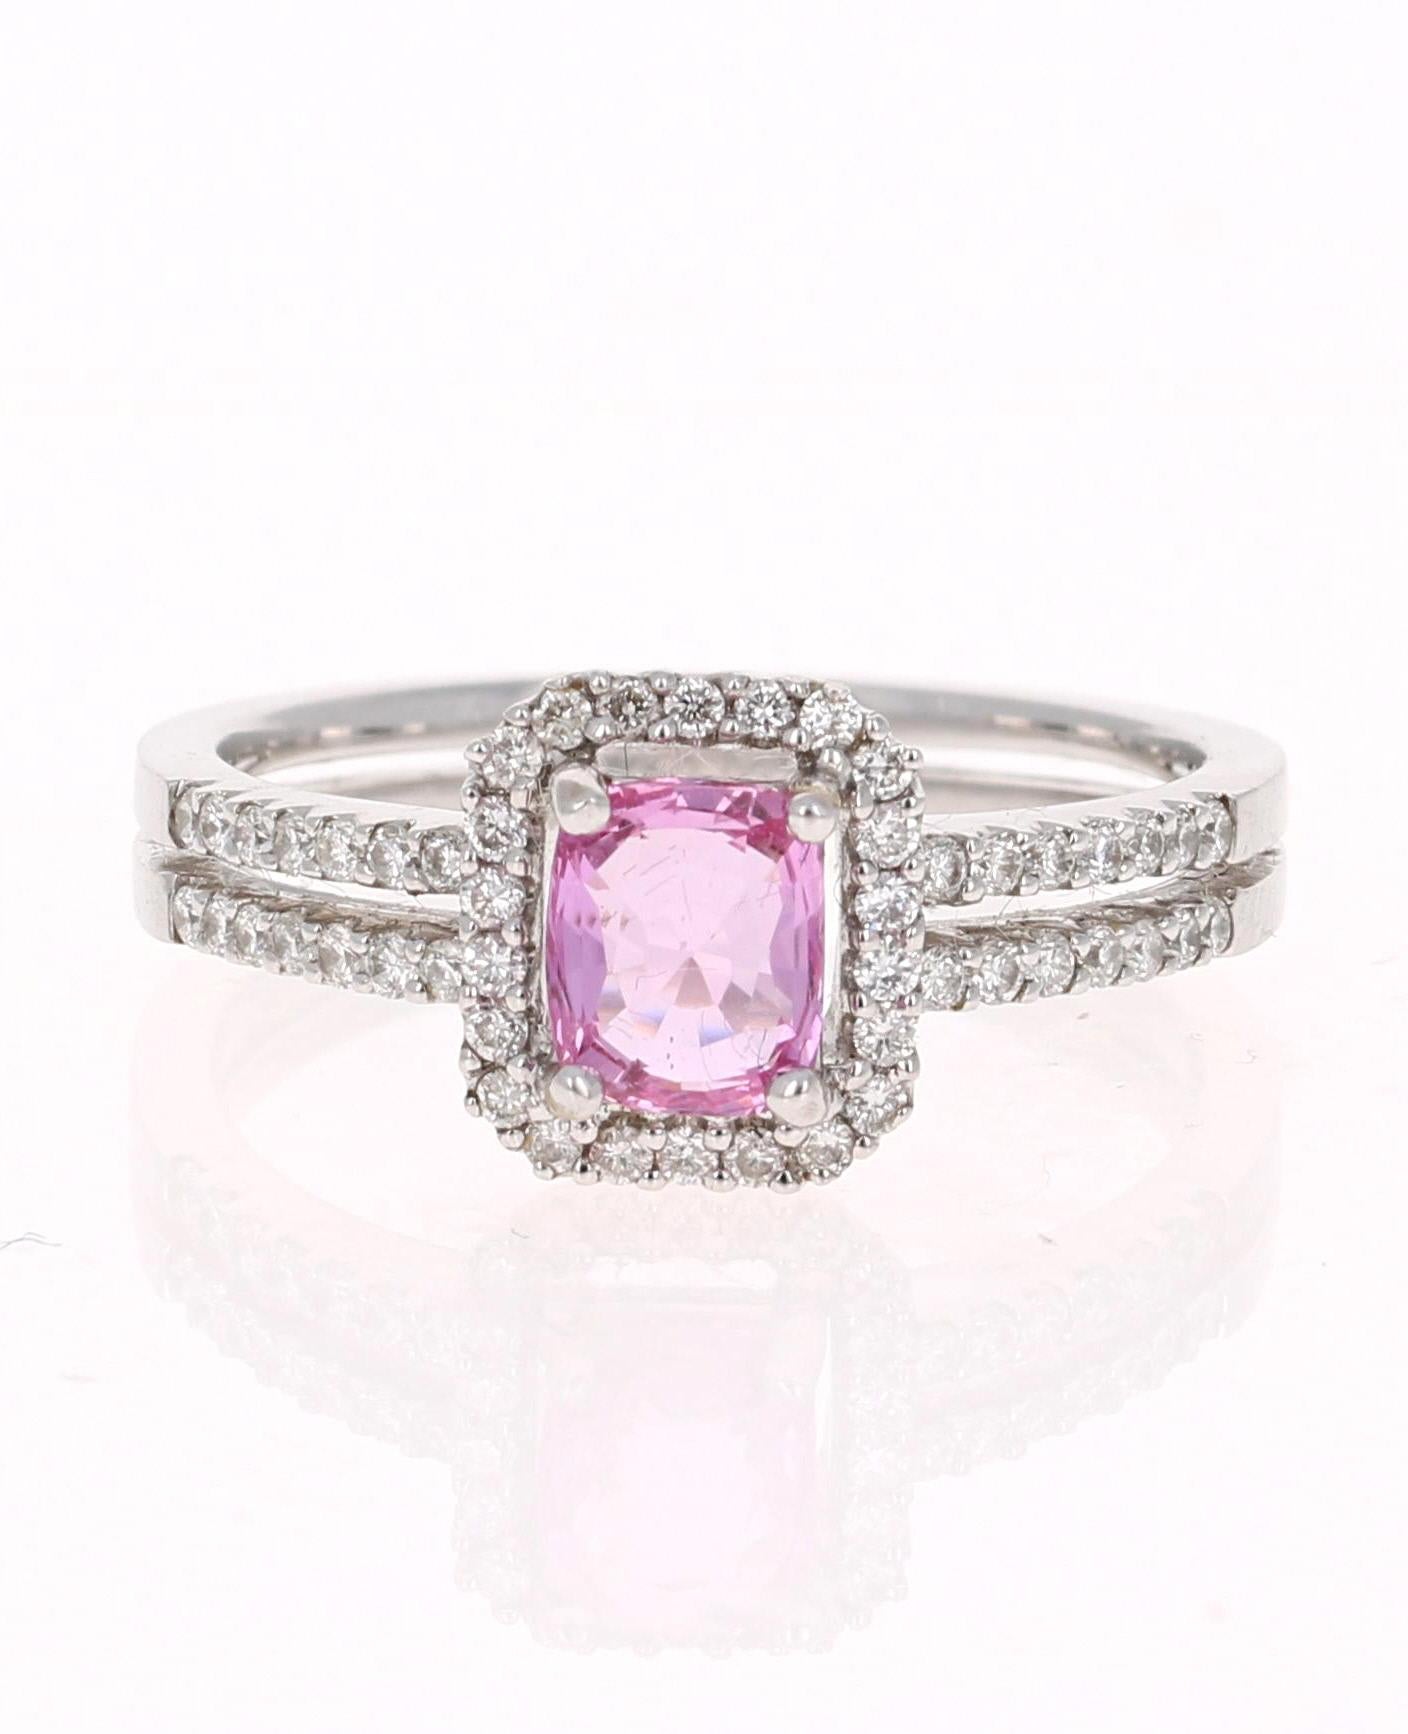 Contemporary 1.22 Carat GIA Certified Pink Sapphire Diamond Ring 14 Karat White Gold